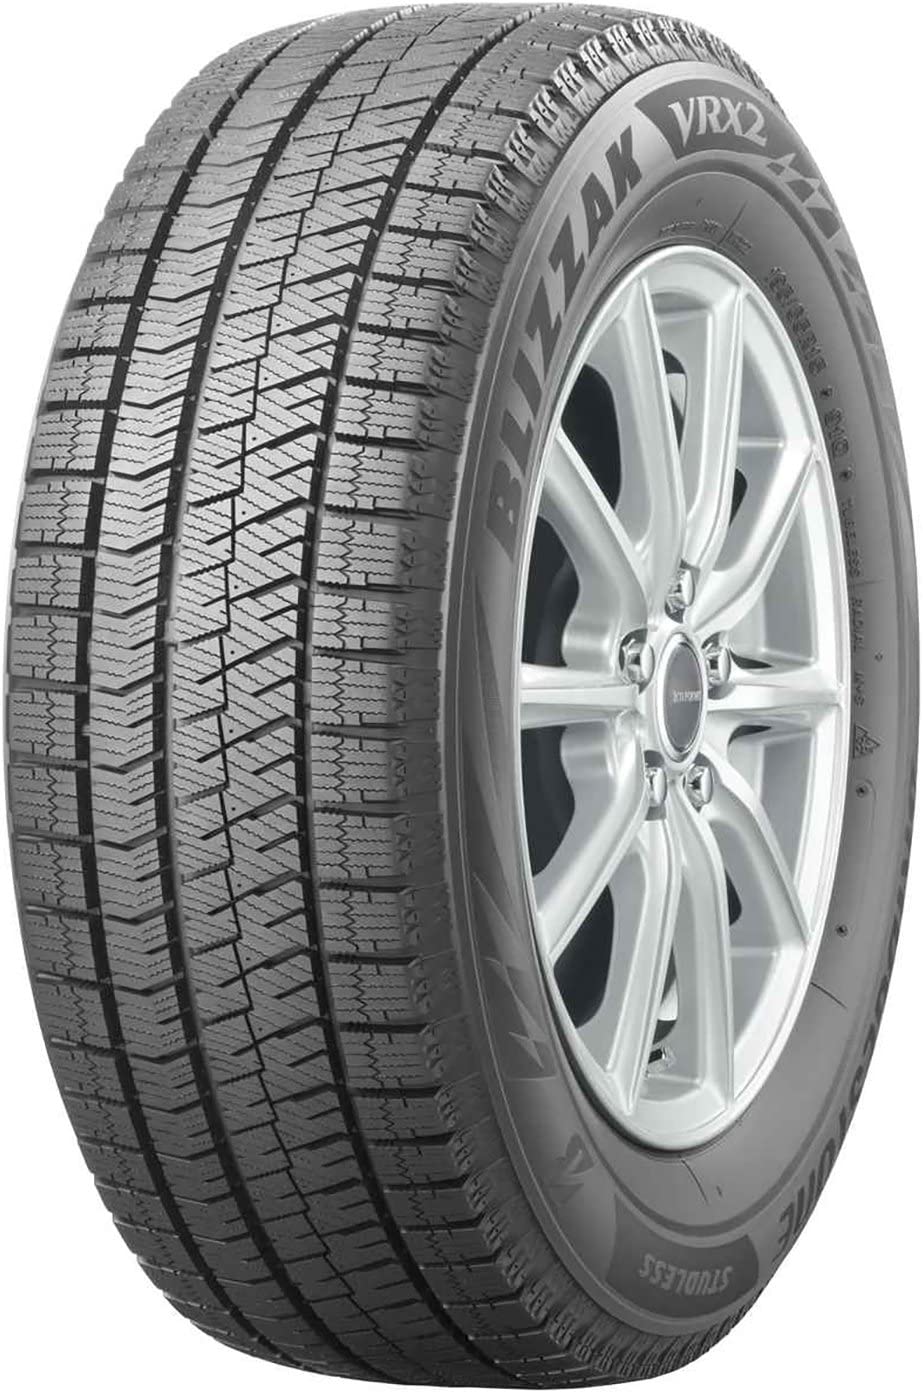 Bridgestone Blizzak VRX2 - Tyre reviews and ratings